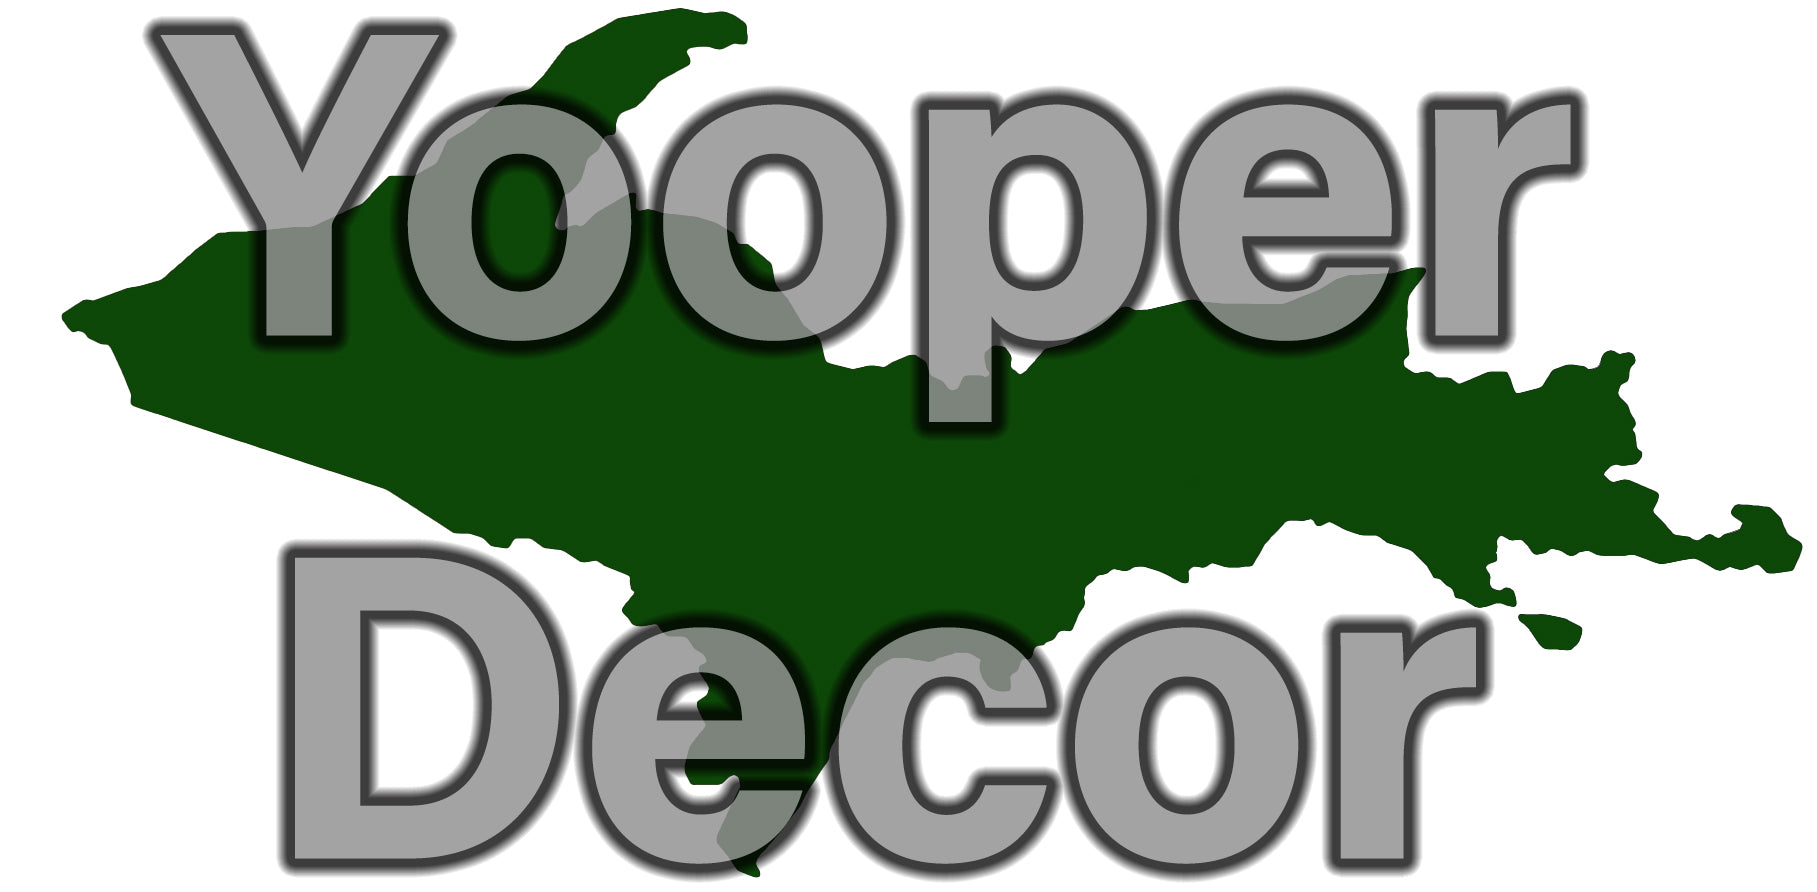 Yooper Decor Upper Peninsula of Michigan logo